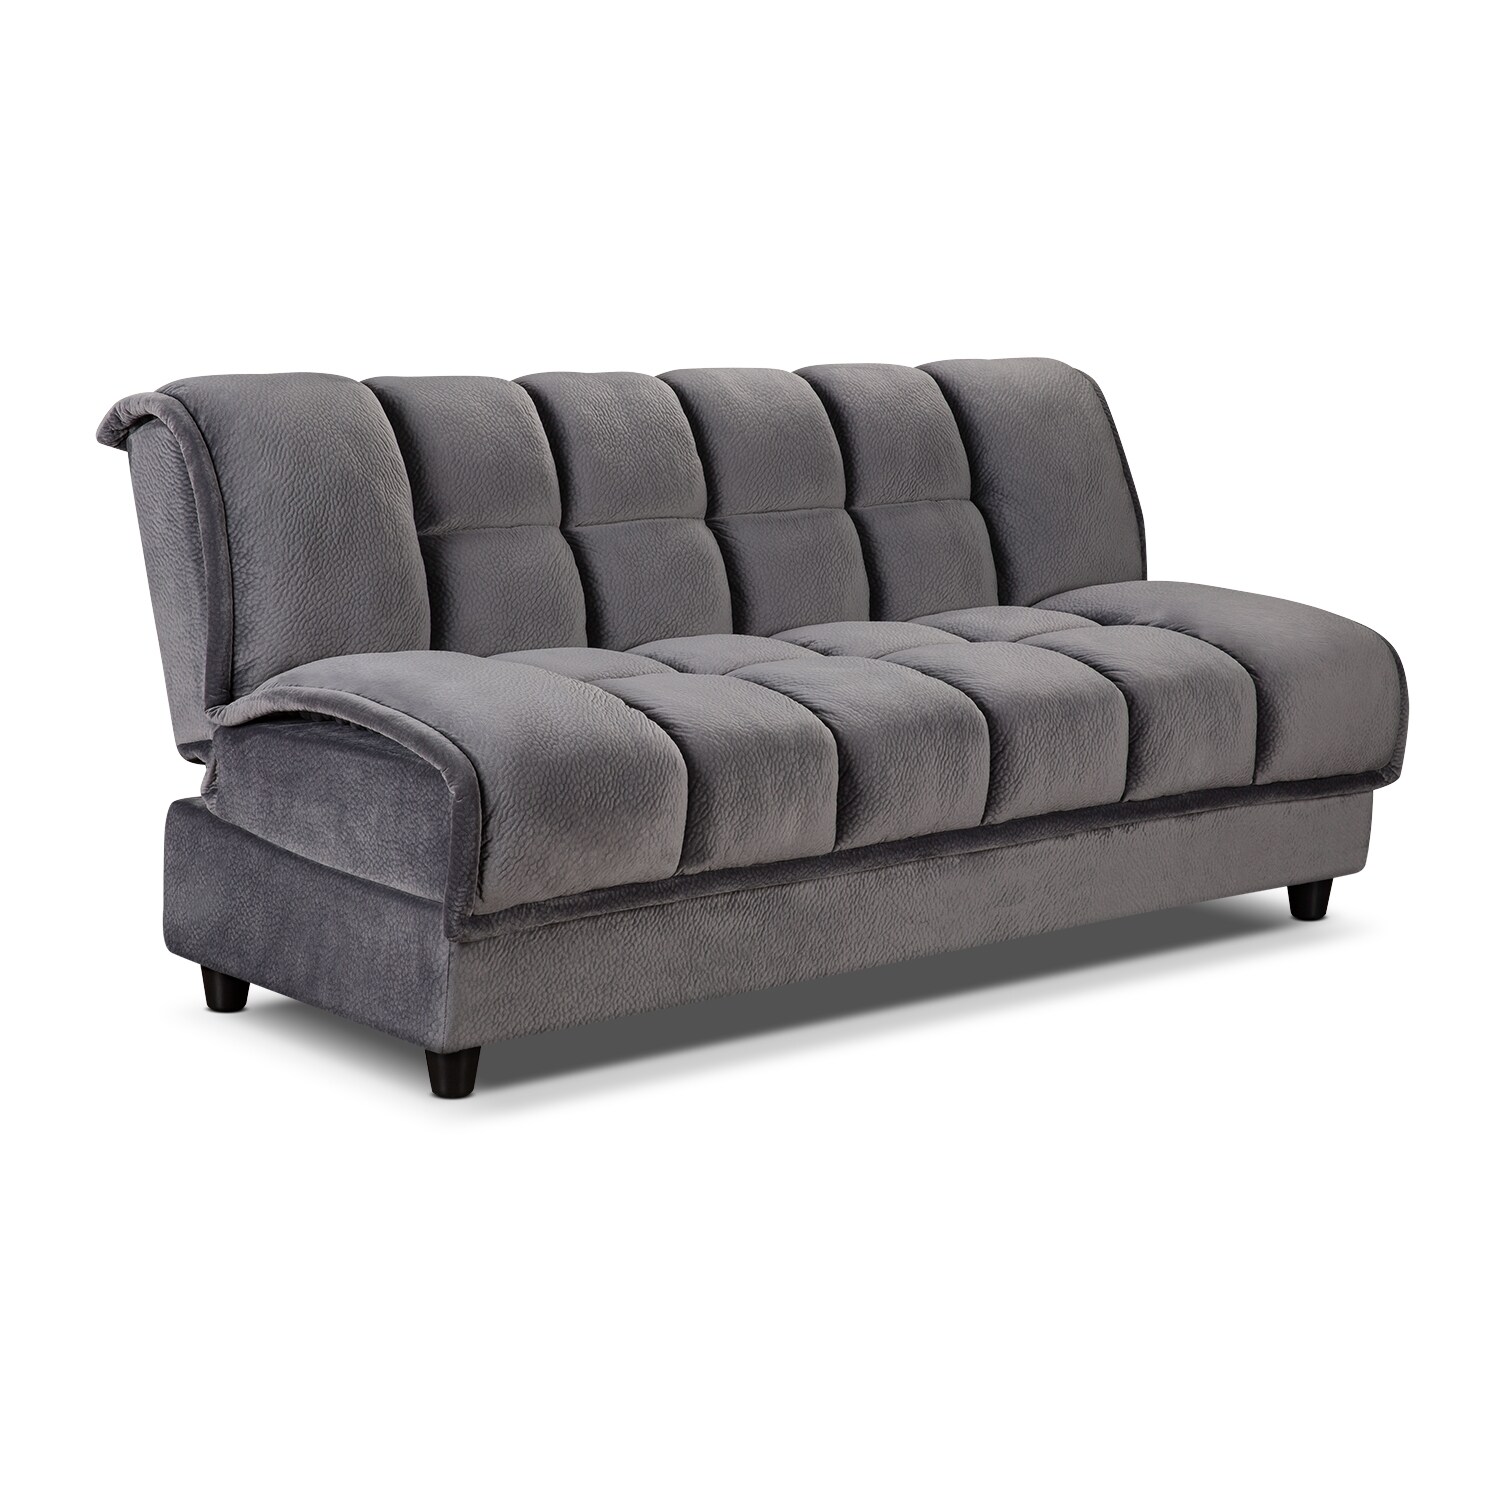 Futon Sofa Bed Gray Value City Furniture